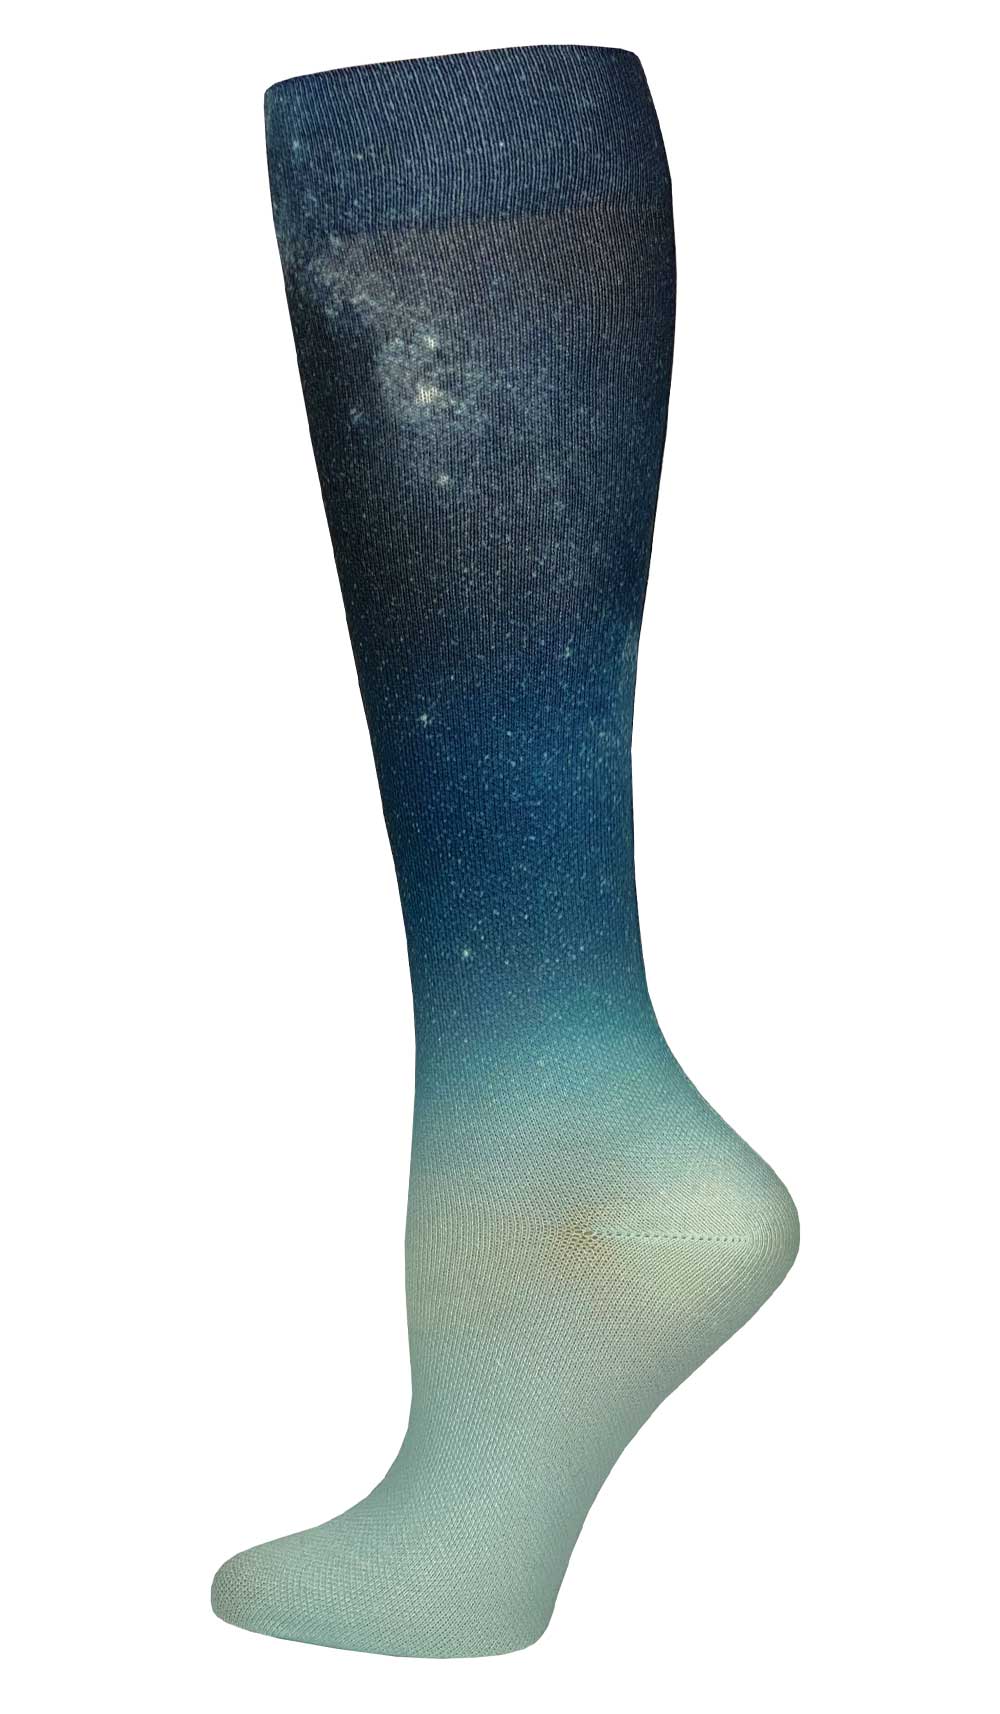 12" Soft Comfort Compression Socks by Prestige /  Galaxy Aqua